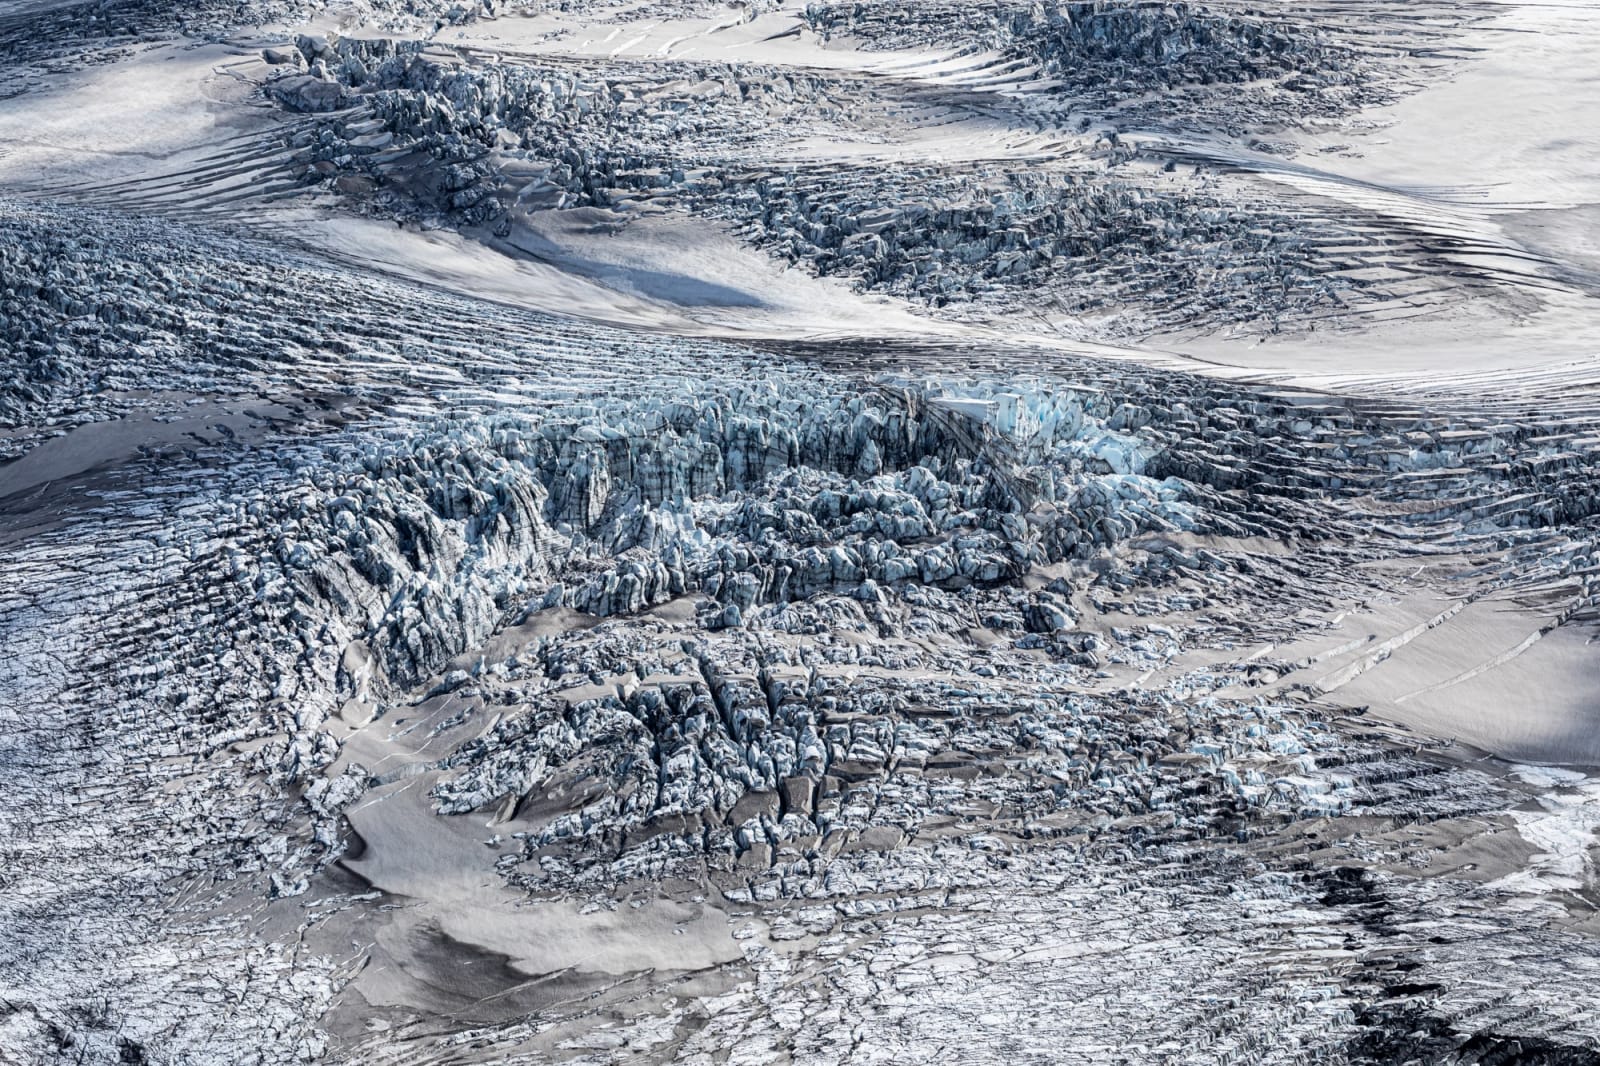 Matjaž Krivic, Islandski ledenik 05 / Iceland Glacier 05, 2019